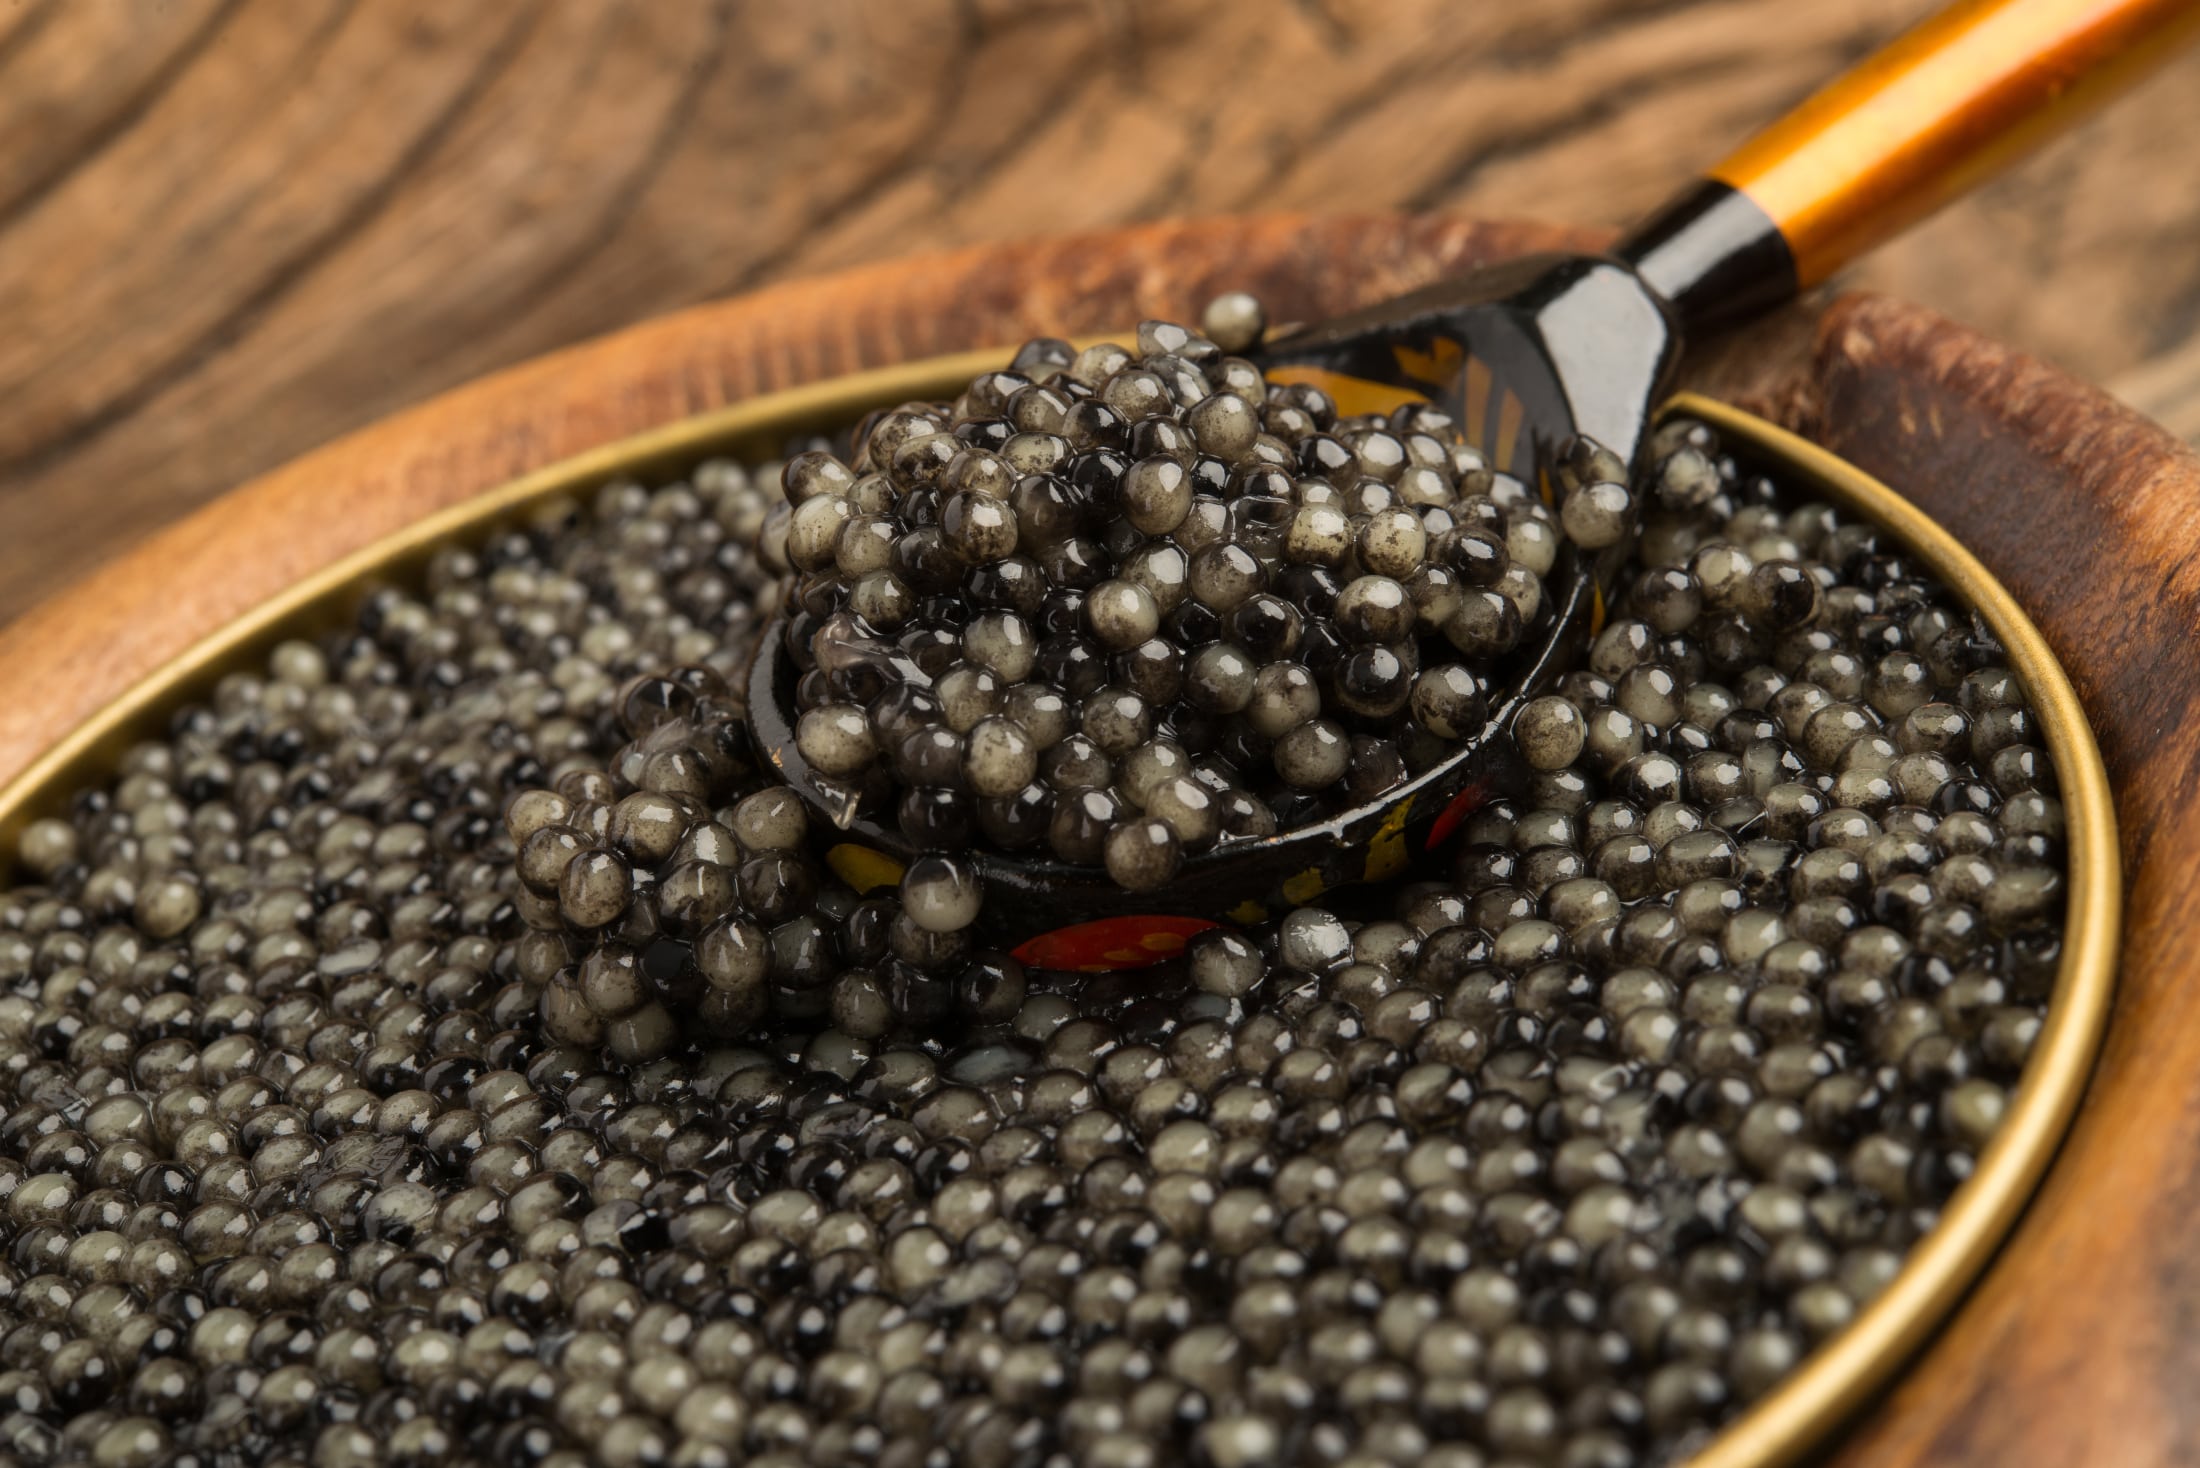 Aquatir Caviar in a Bowl